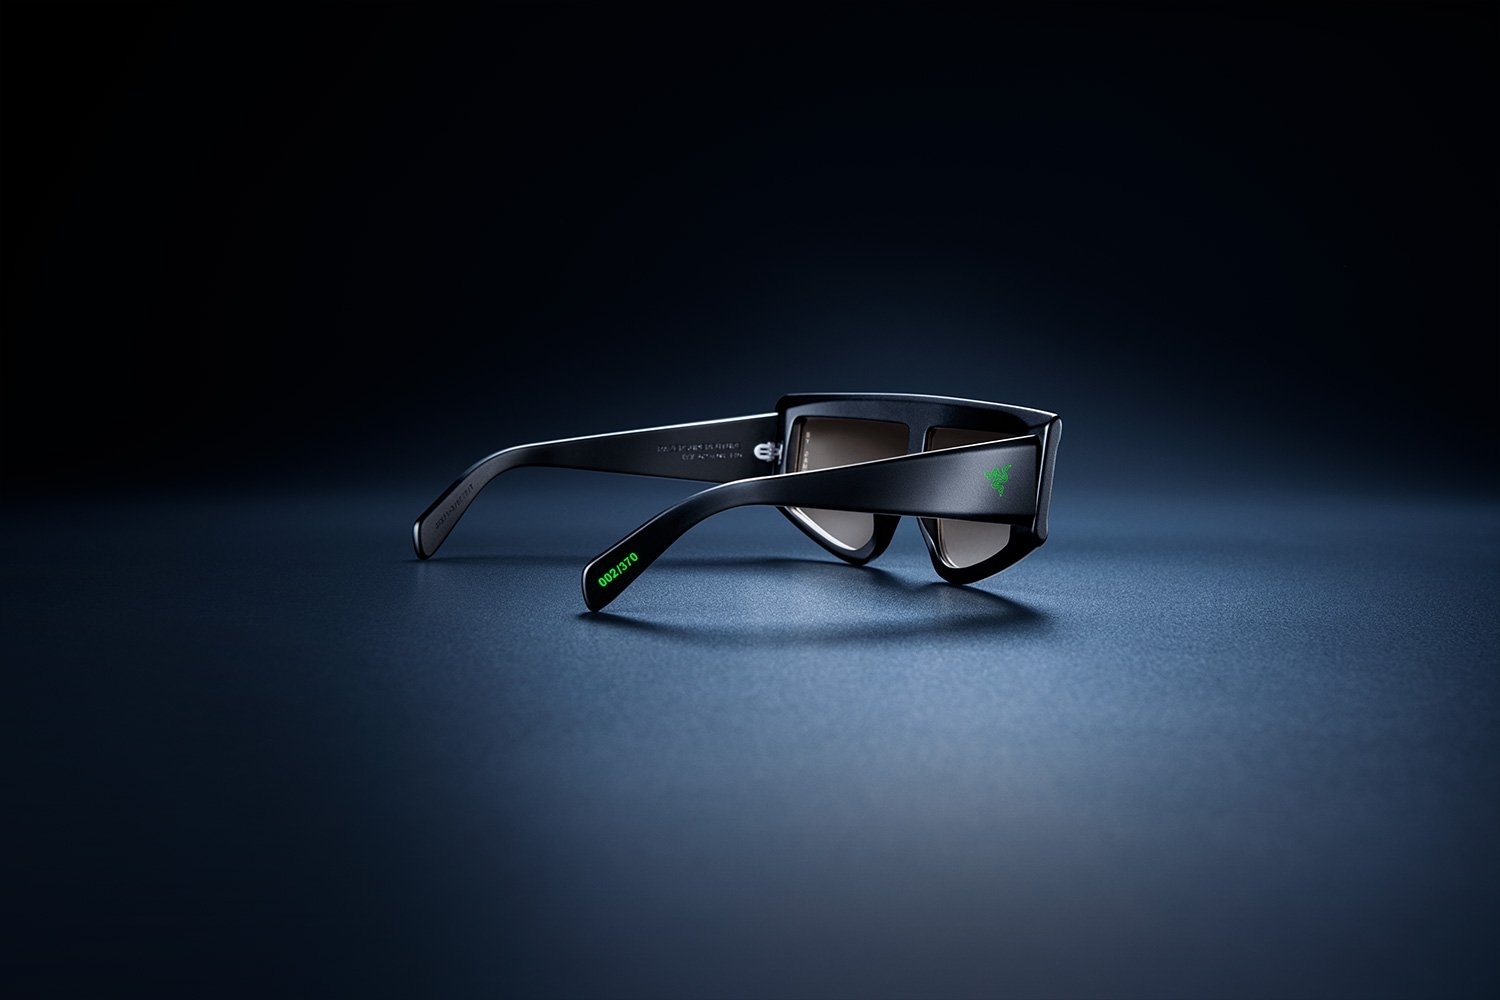 TweakTown Enlarged Image - The new Razersuperfuture sunglasses, image credit: Razer.